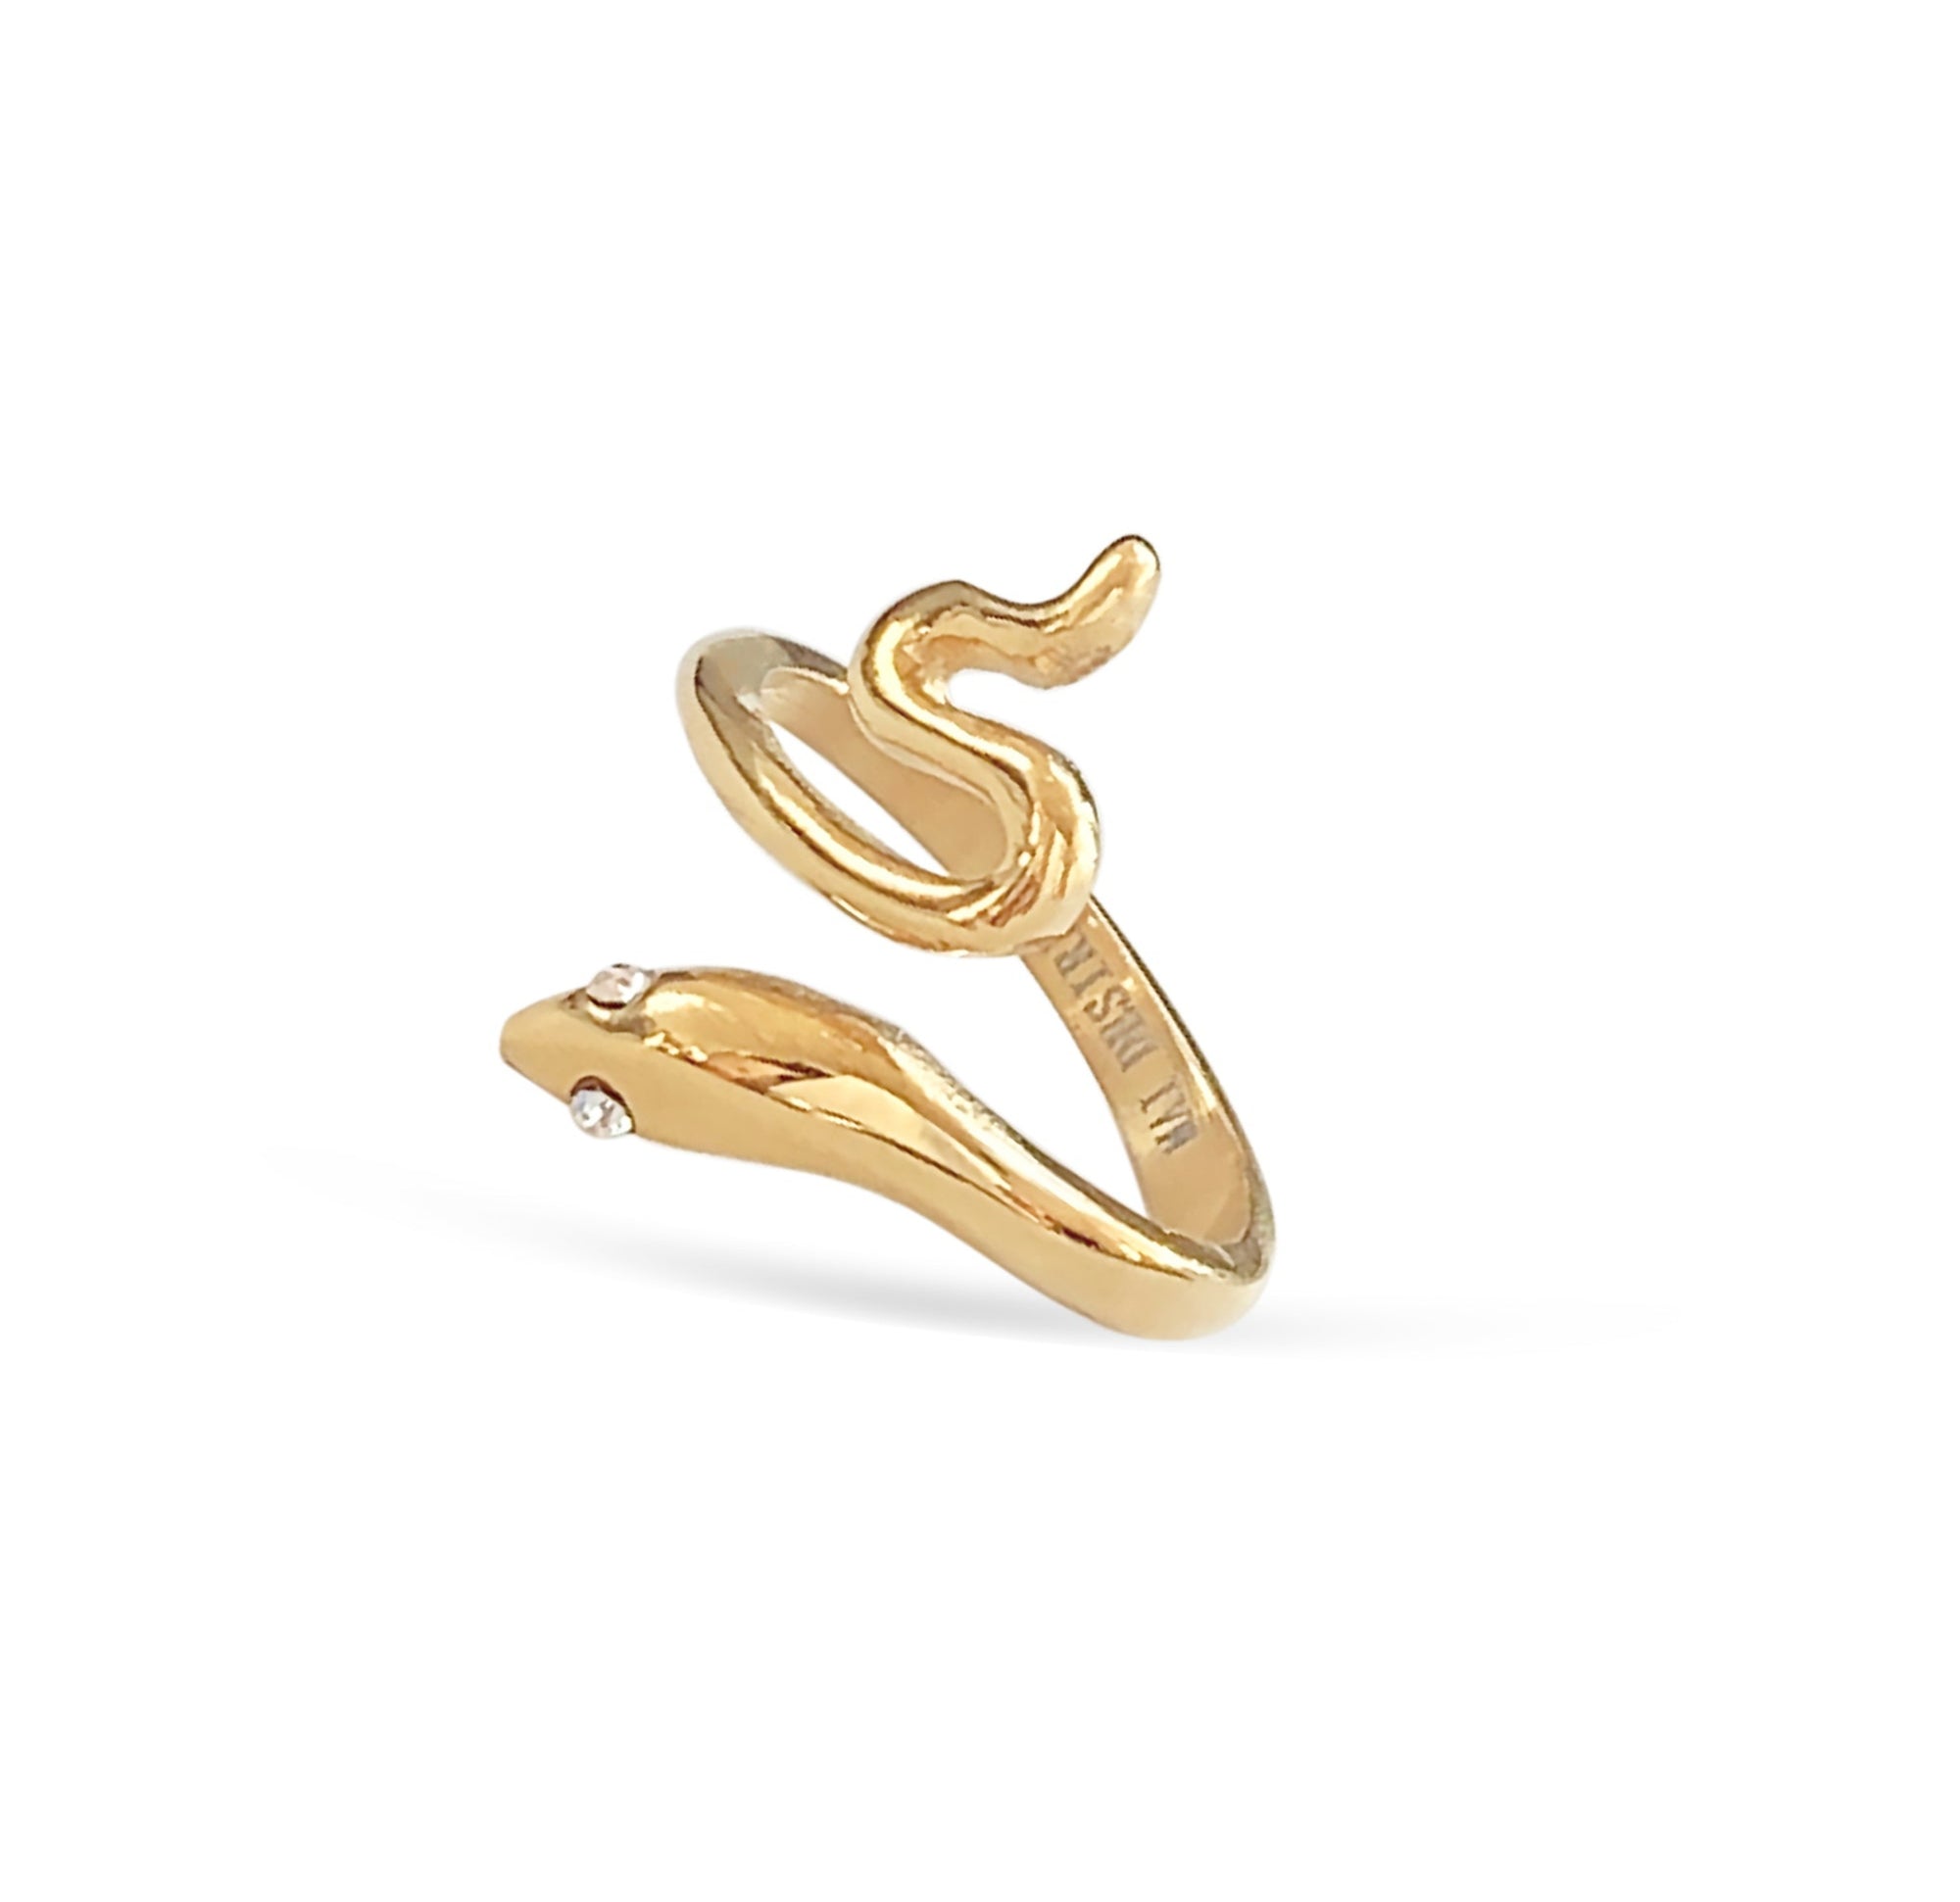 gold snake ring waterproof jewelry